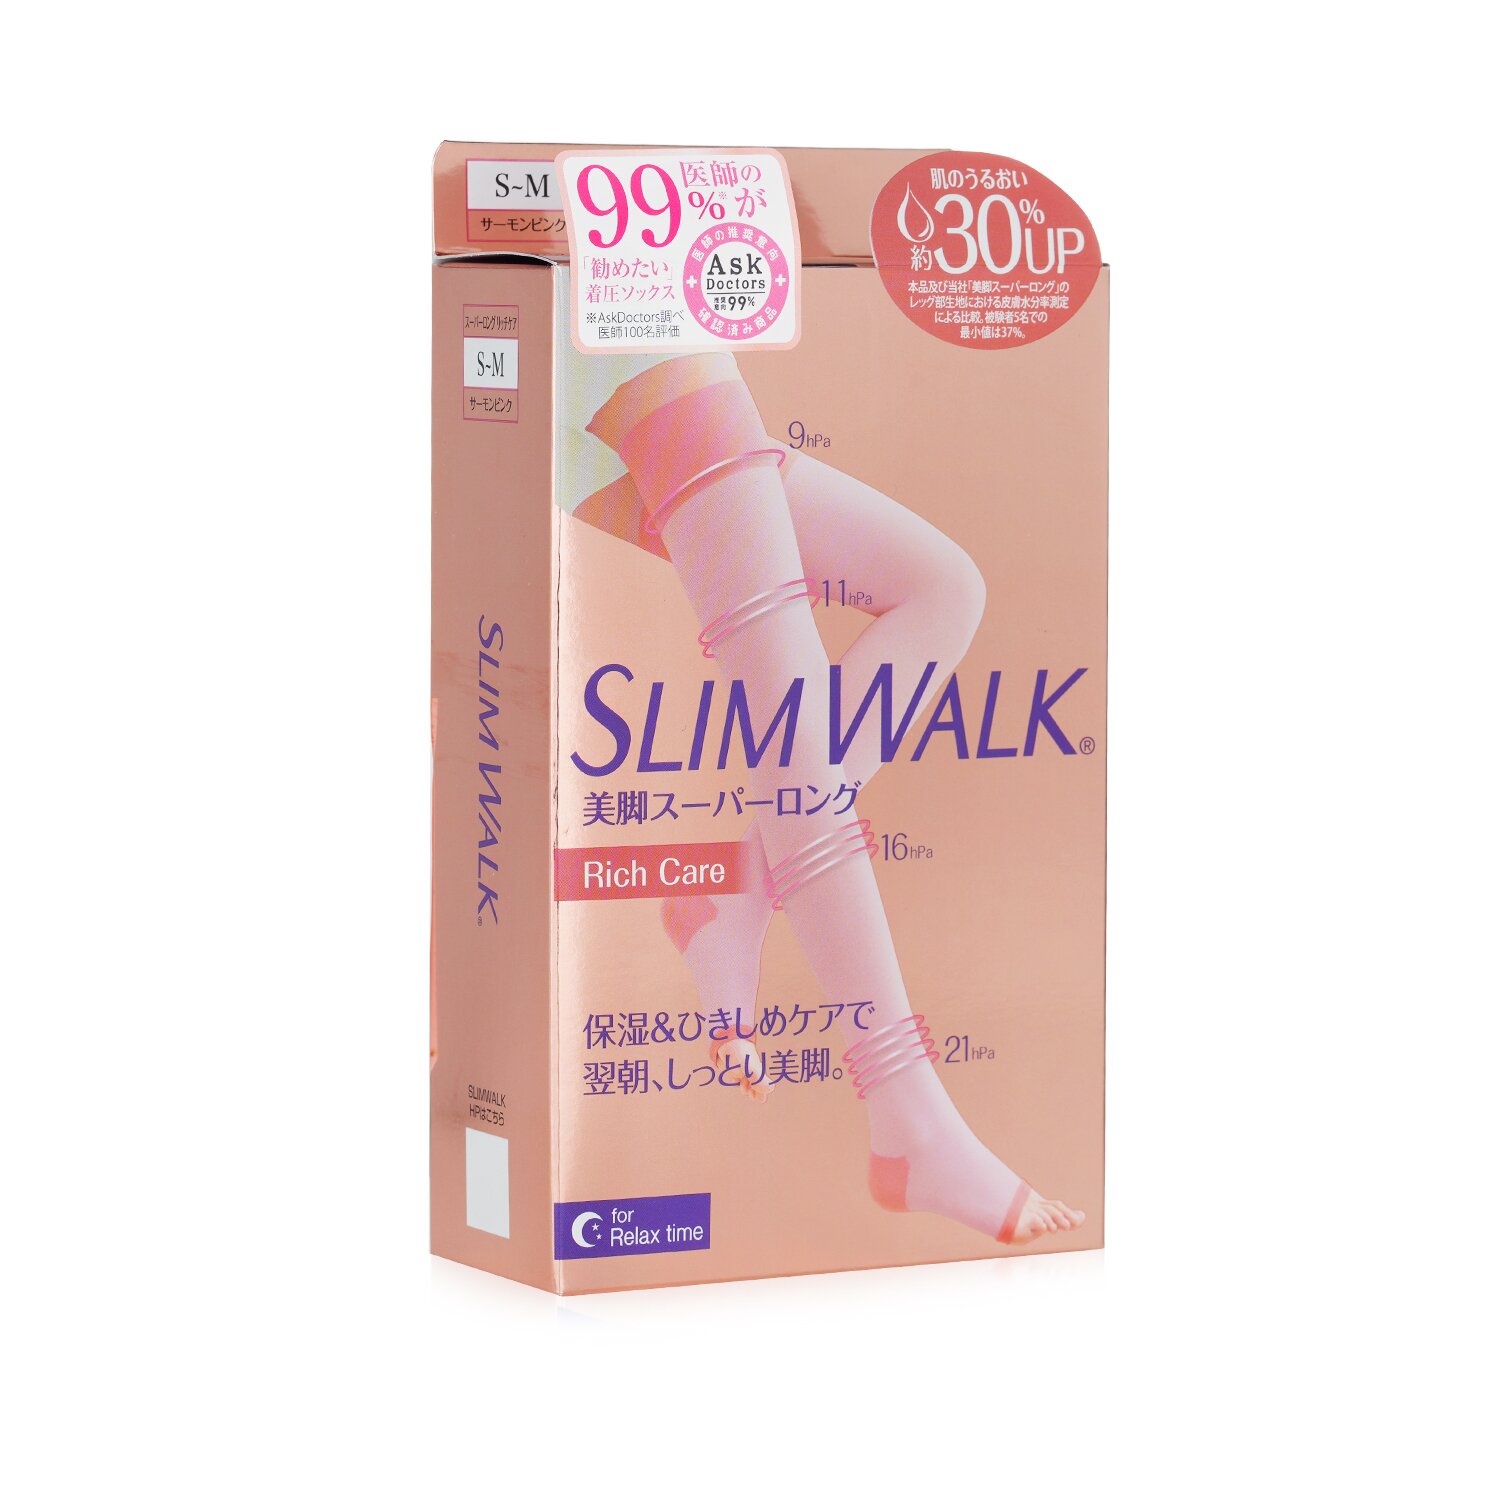 SlimWalk Compression Open-Toe Socks For Relax, Moisturizing 1pair